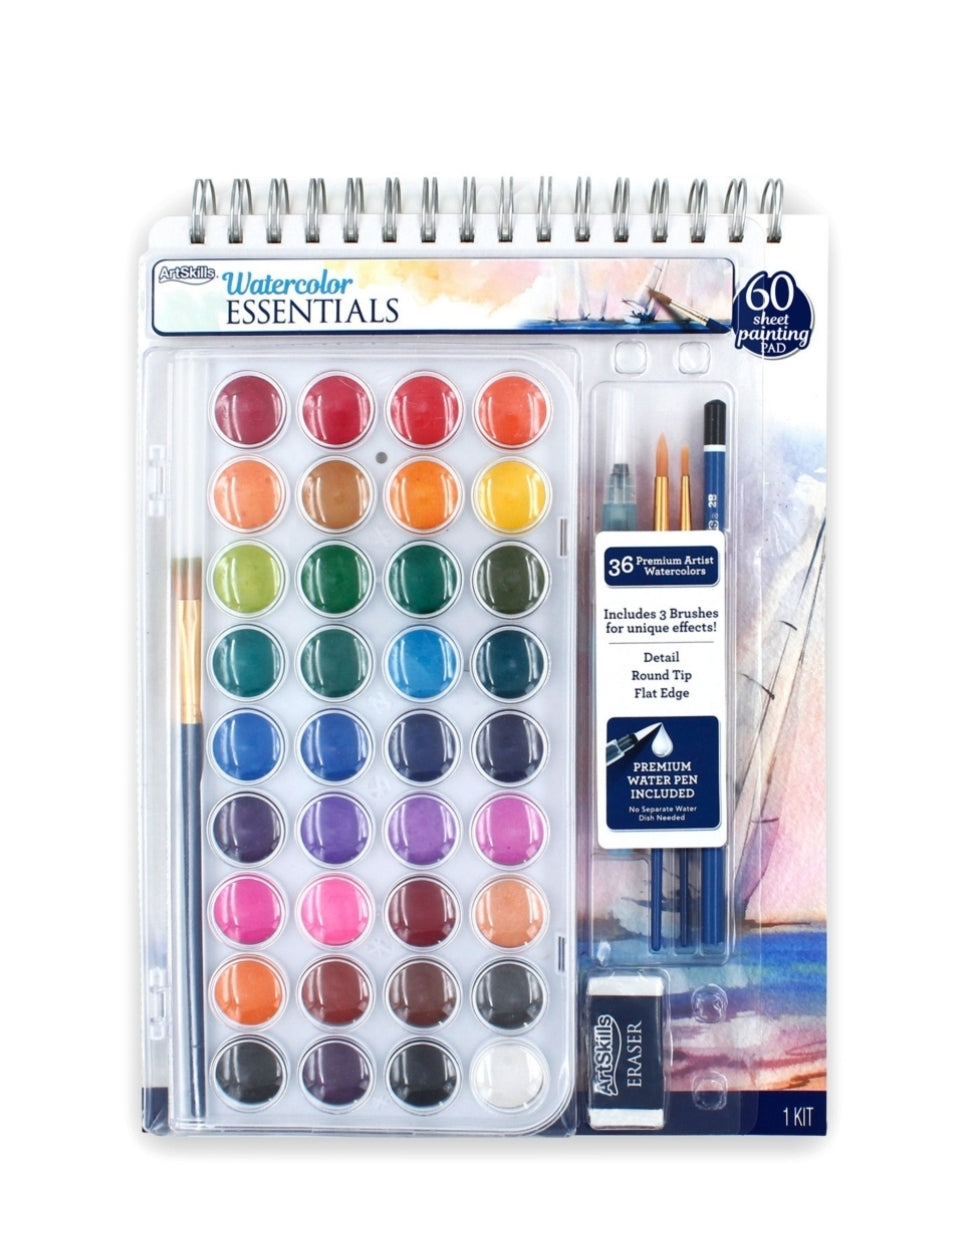 ArtSkills Essential Portable Premium Art Supply Kit, 200 Pieces